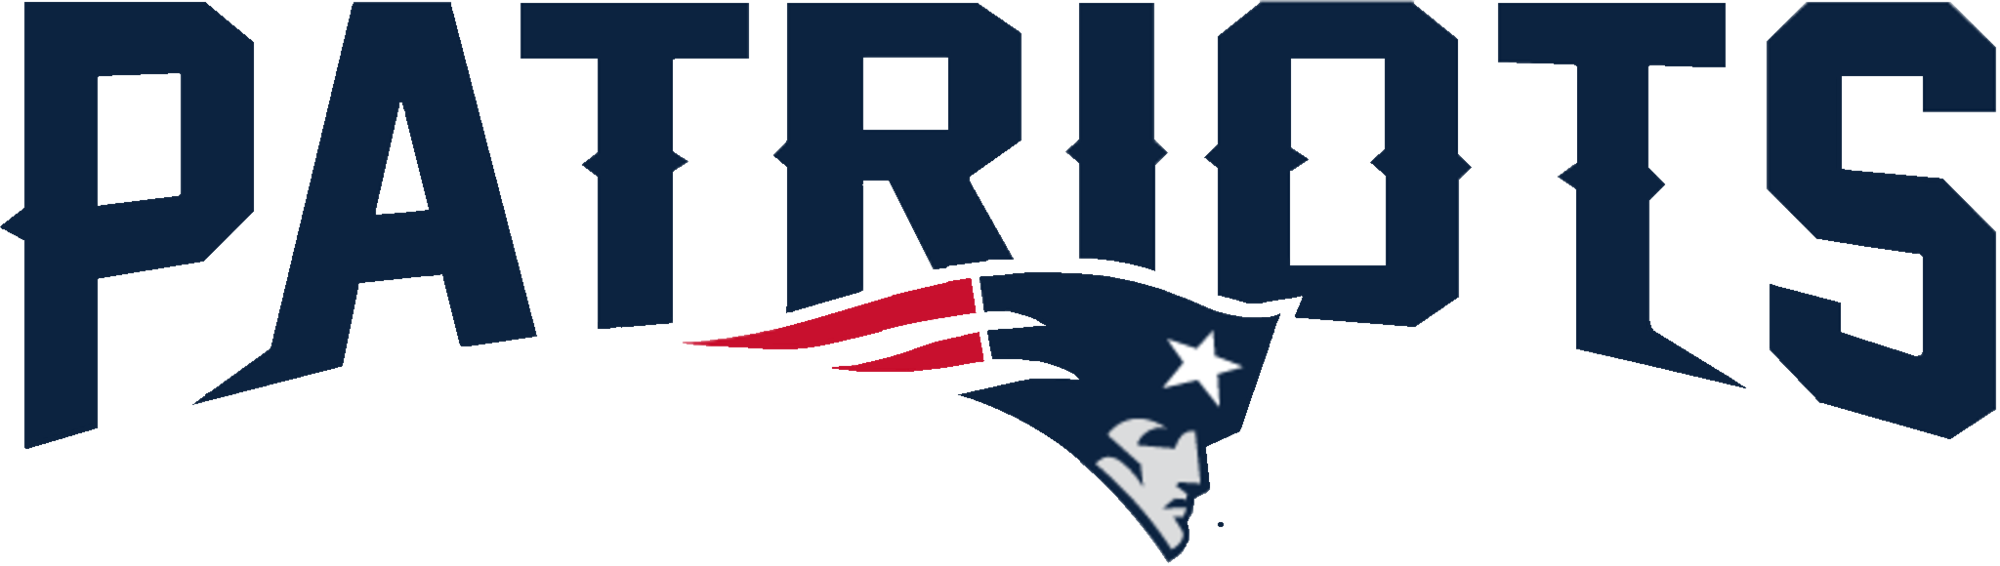 New England American Football - New England Patriots Logo (2000x566)